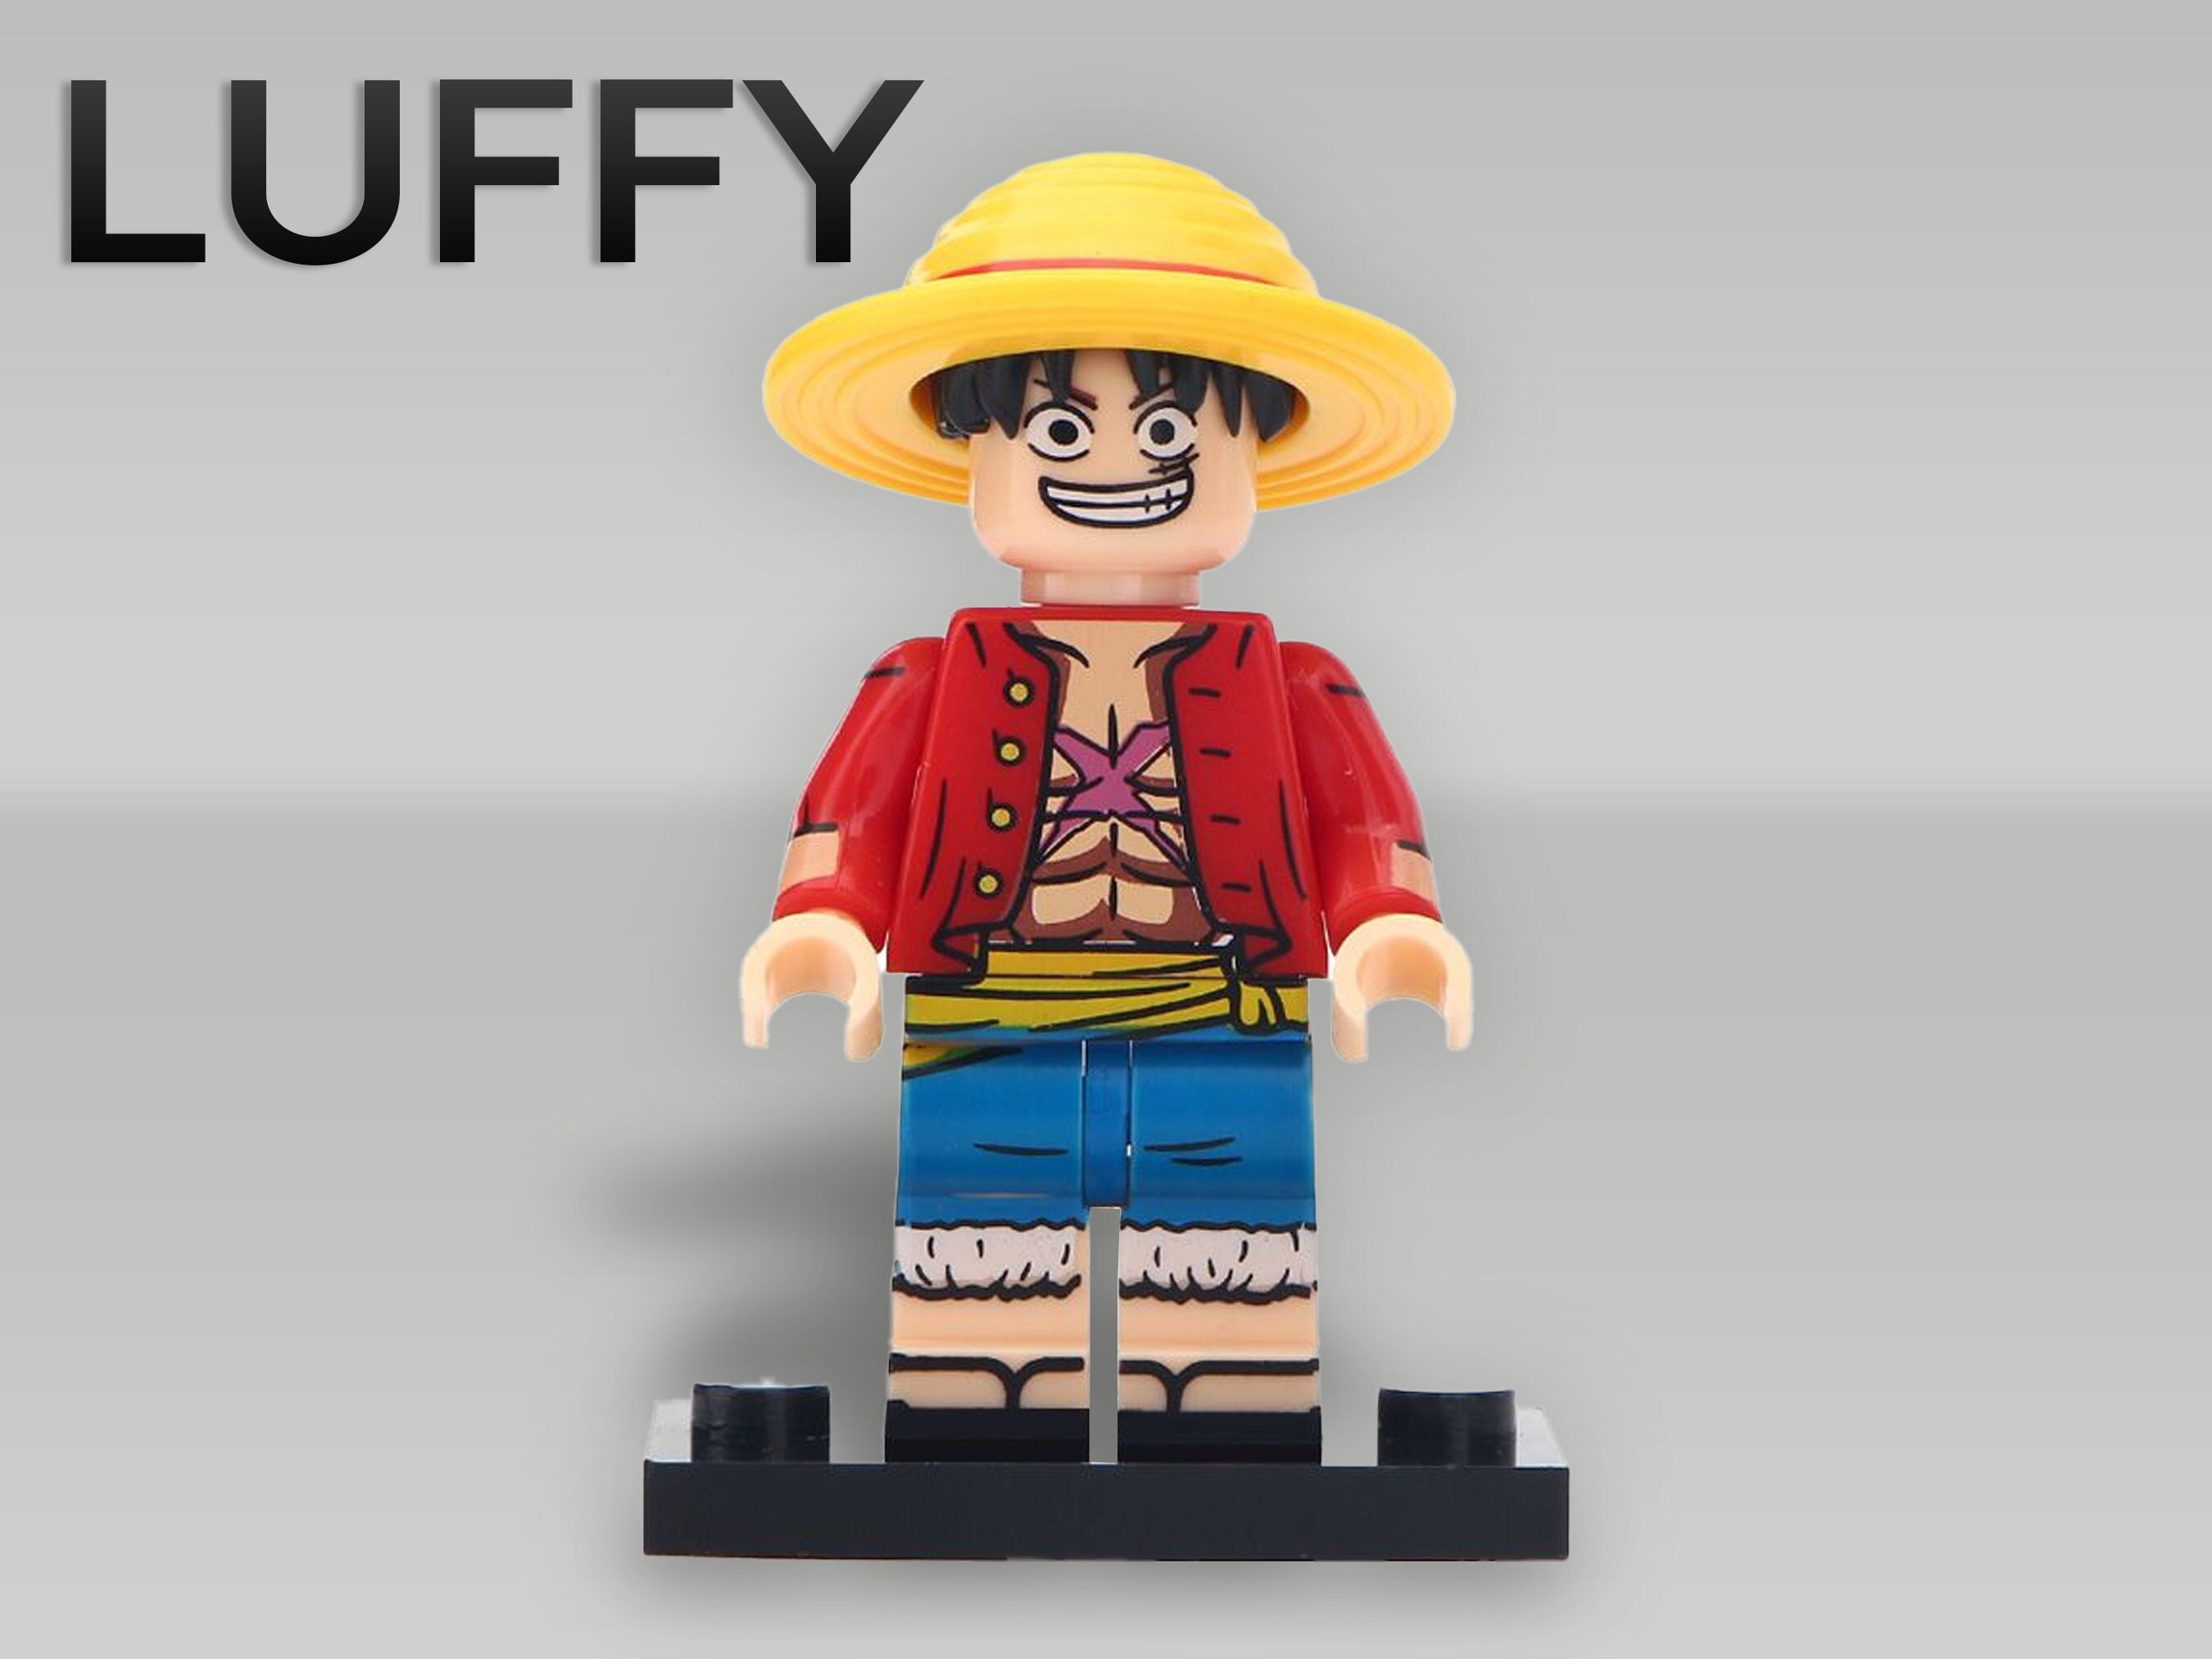 Lego Custom Zoro Play Club VIP minifigure One Piece Custom